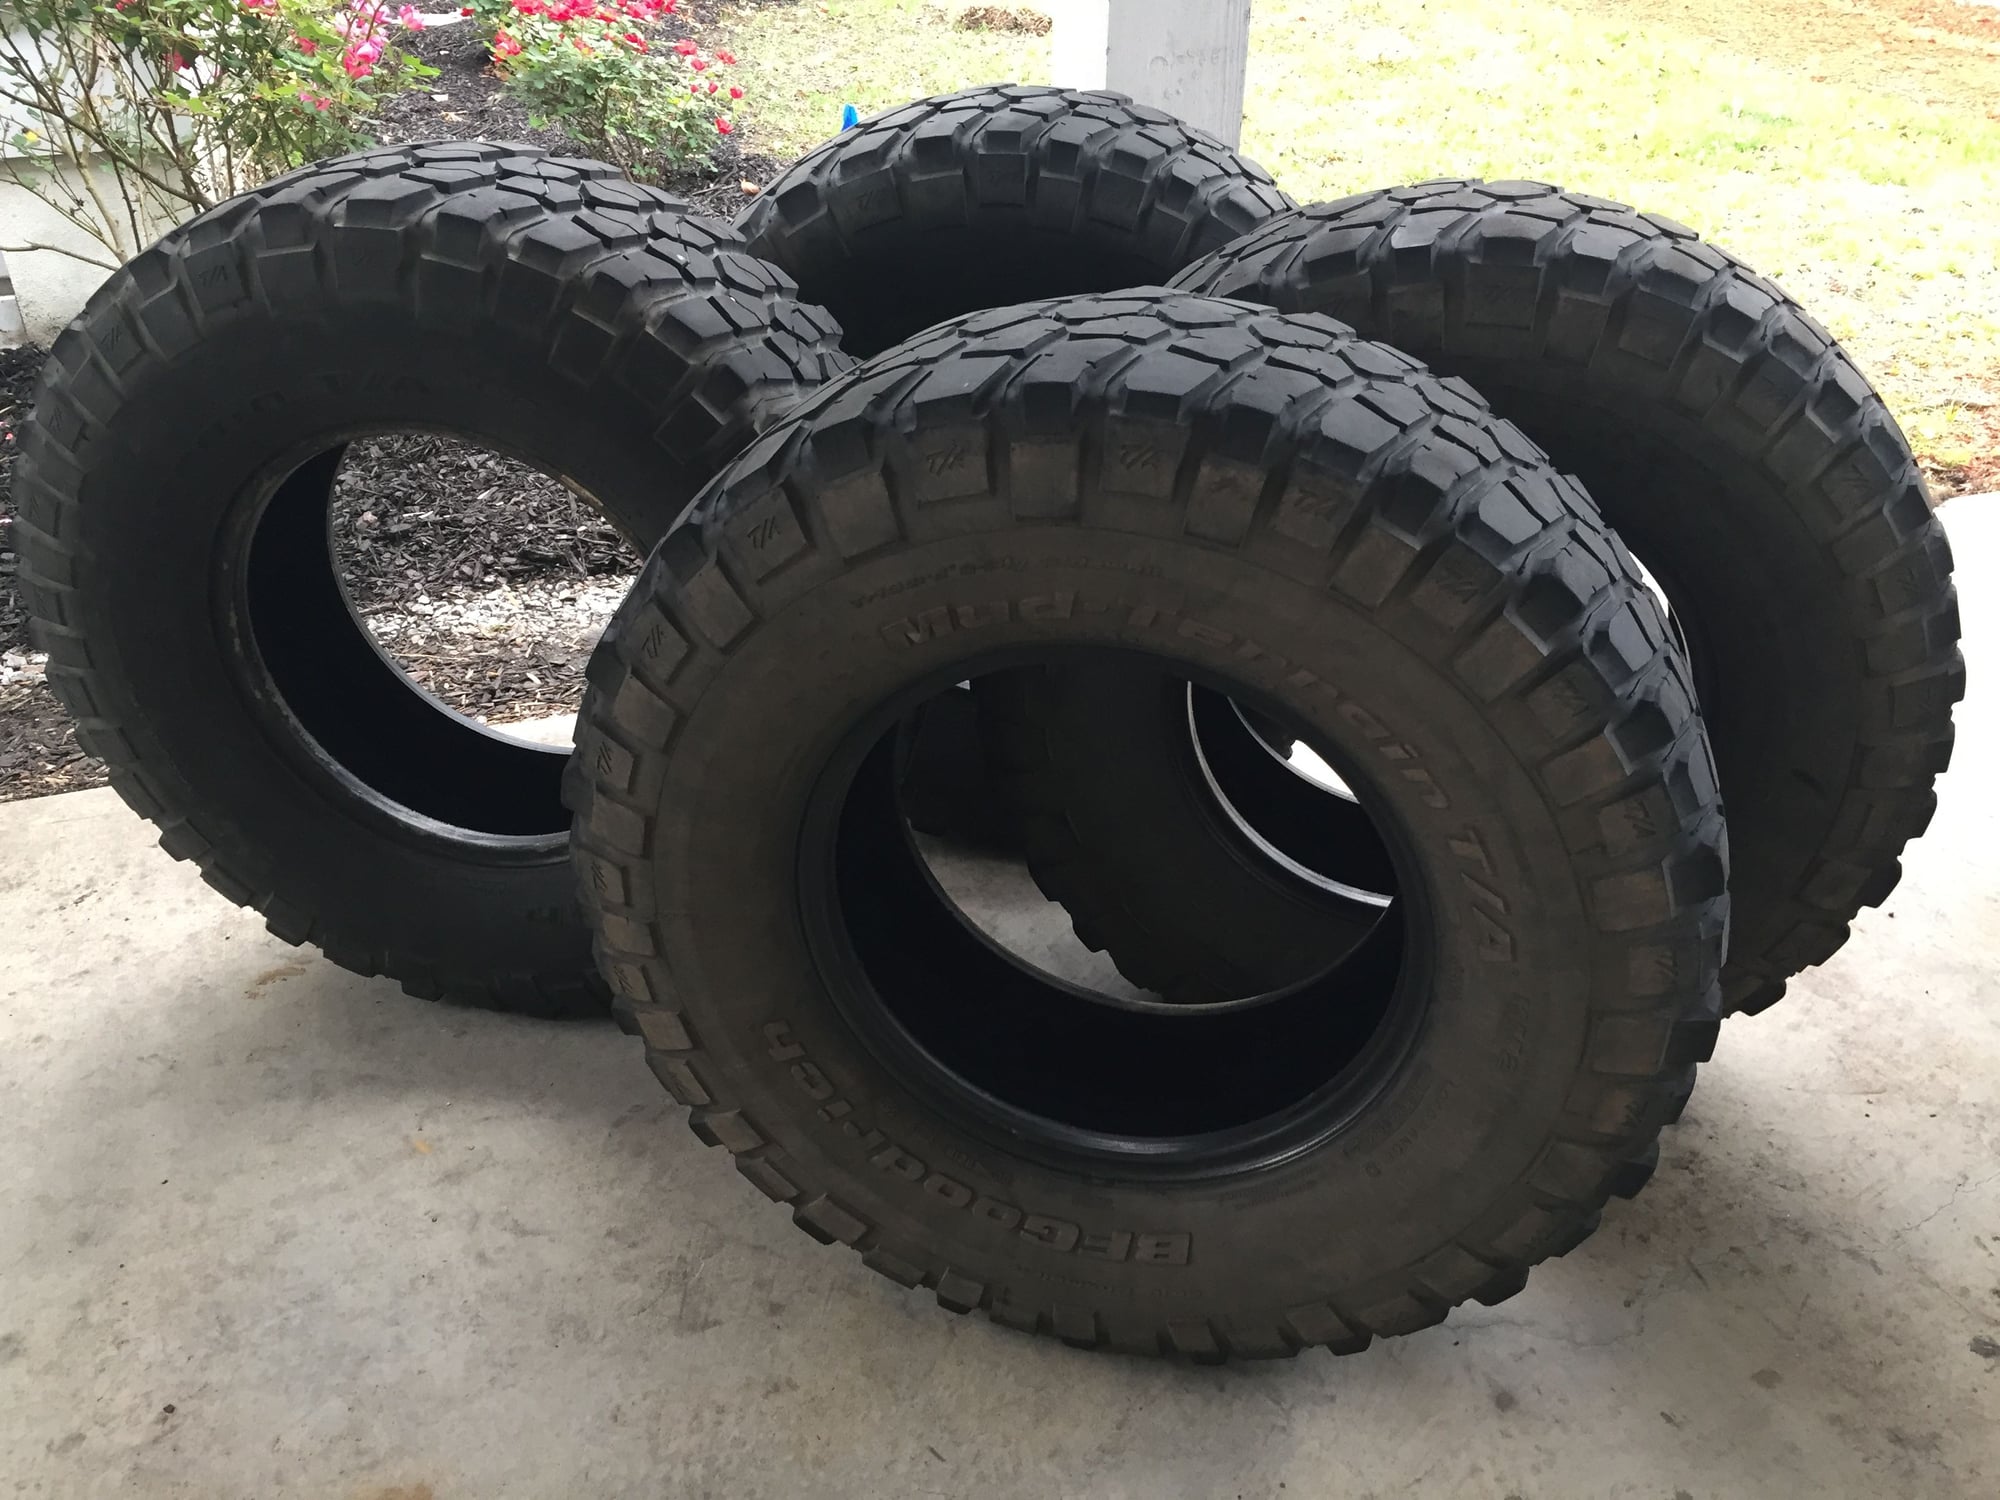 Wheels and Tires/Axles - (4) Used BFG KM2 35x12.50x17 - Used - Savannah, GA 31407, United States